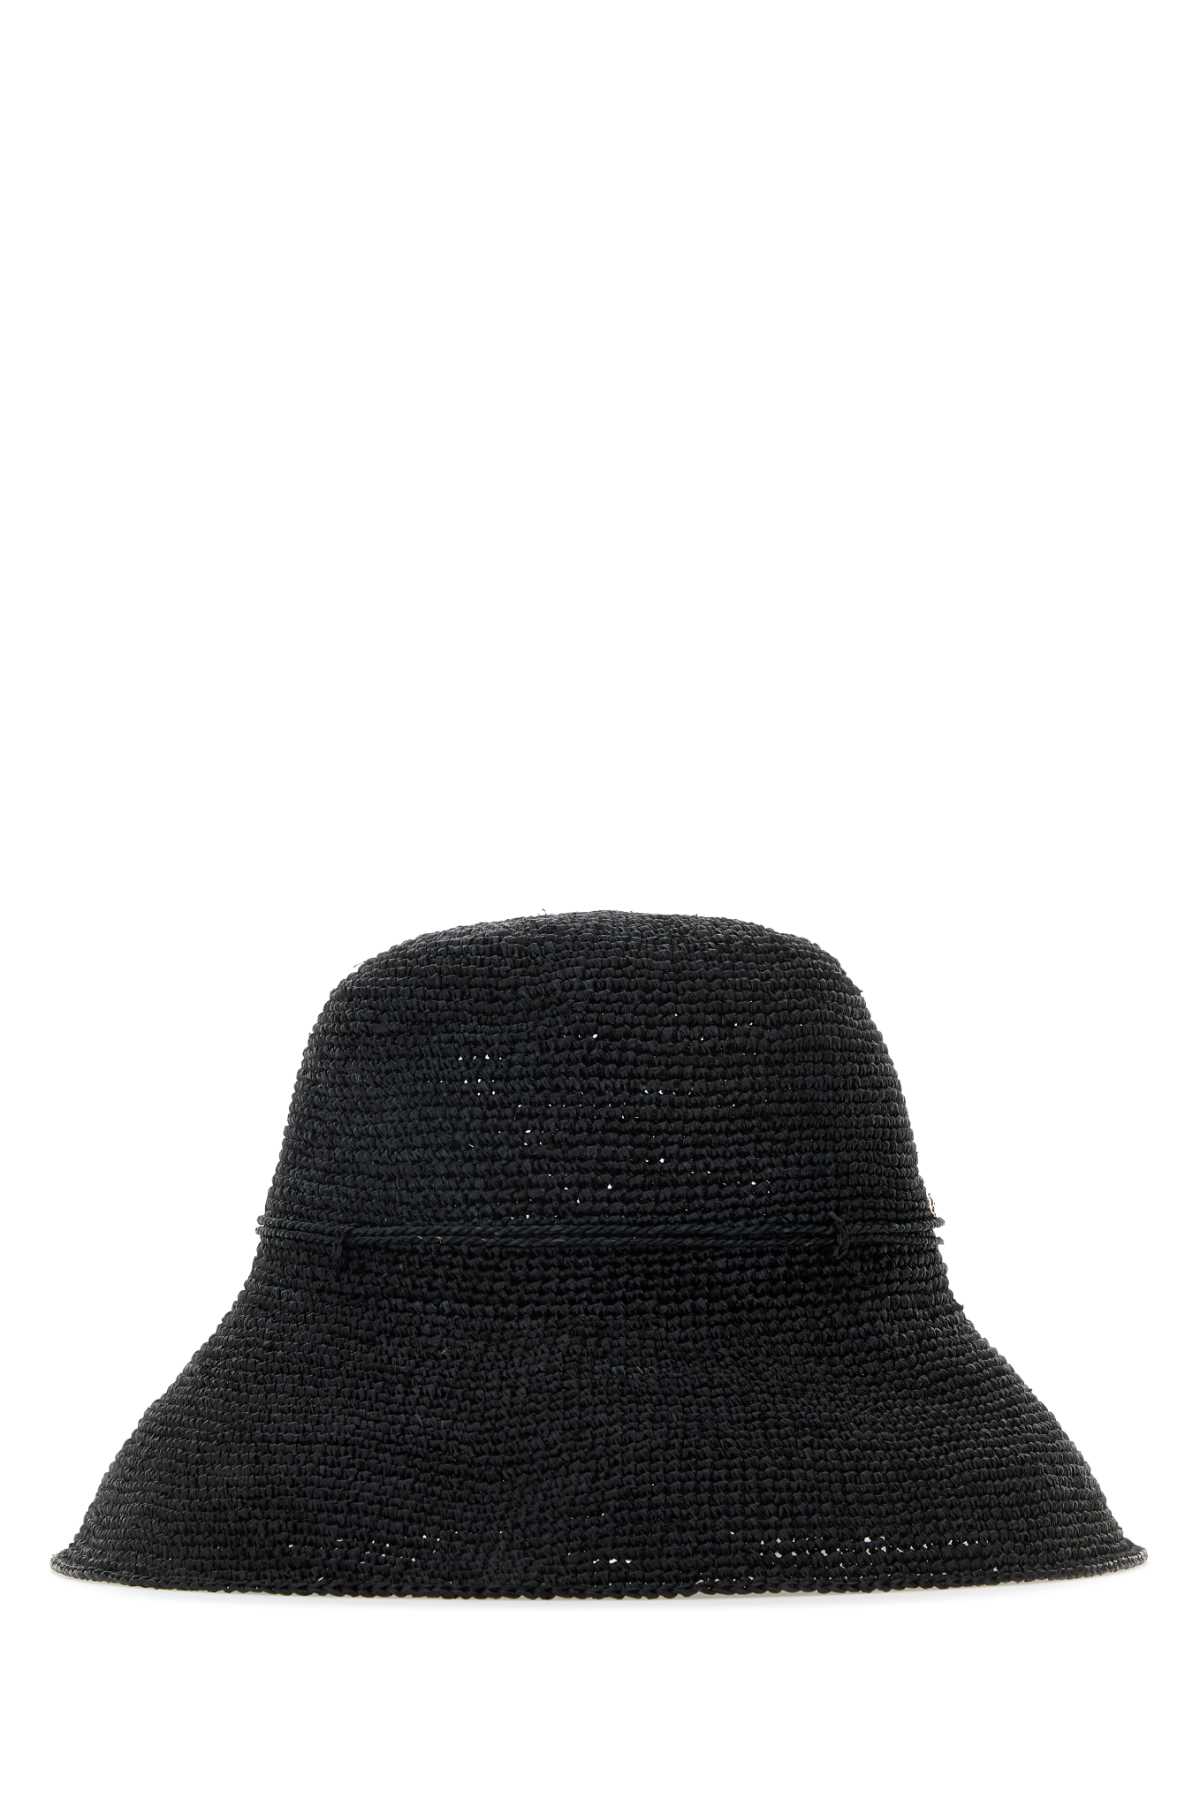 Black Raffia Provence 10 Hat